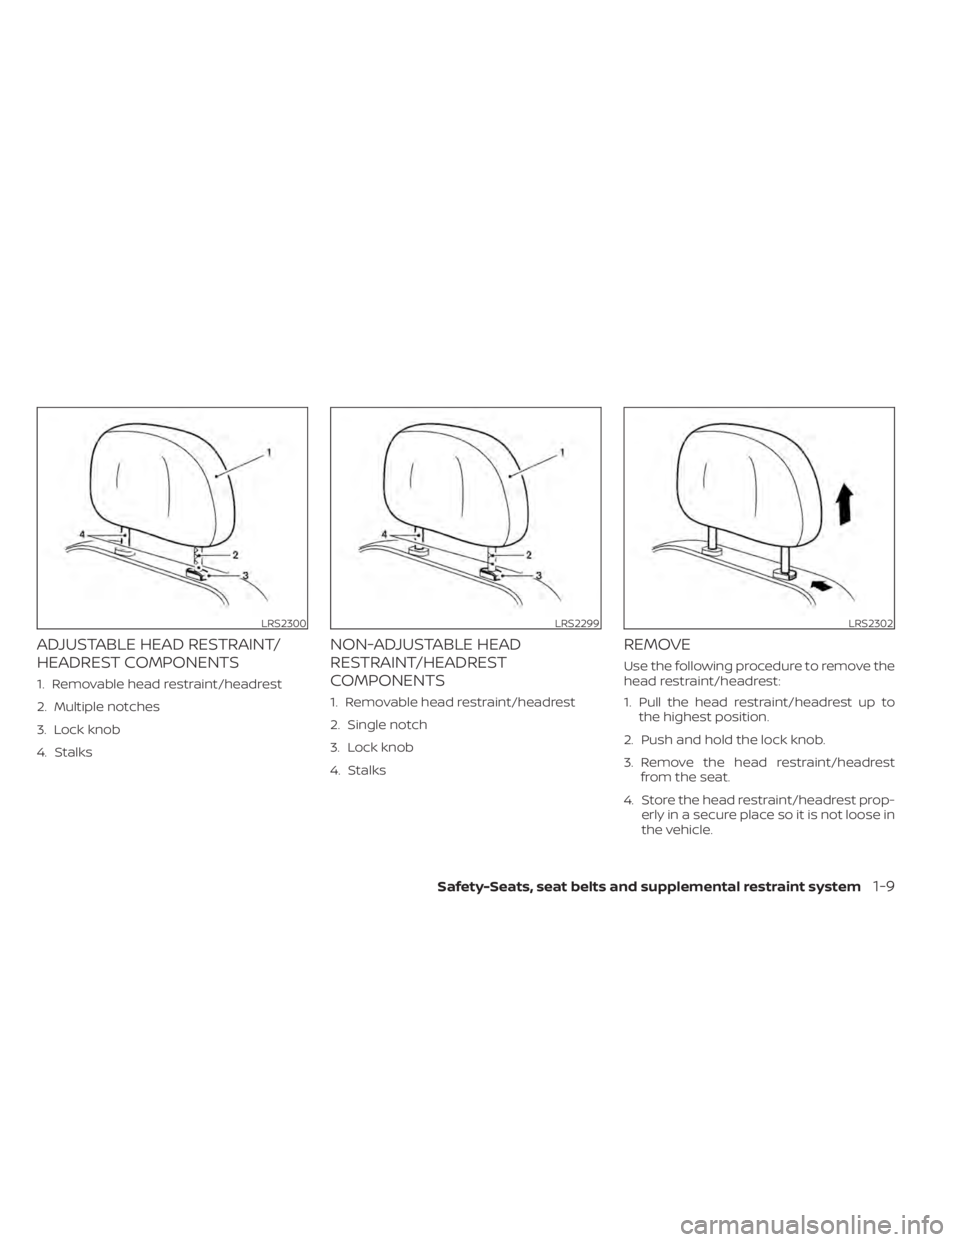 NISSAN ALTIMA 2023 Owners Manual ADJUSTABLE HEAD RESTRAINT/
HEADREST COMPONENTS
1. Removable head restraint/headrest
2. Multiple notches
3. Lock knob
4. Stalks
NON-ADJUSTABLE HEAD
RESTRAINT/HEADREST
COMPONENTS
1. Removable head restr